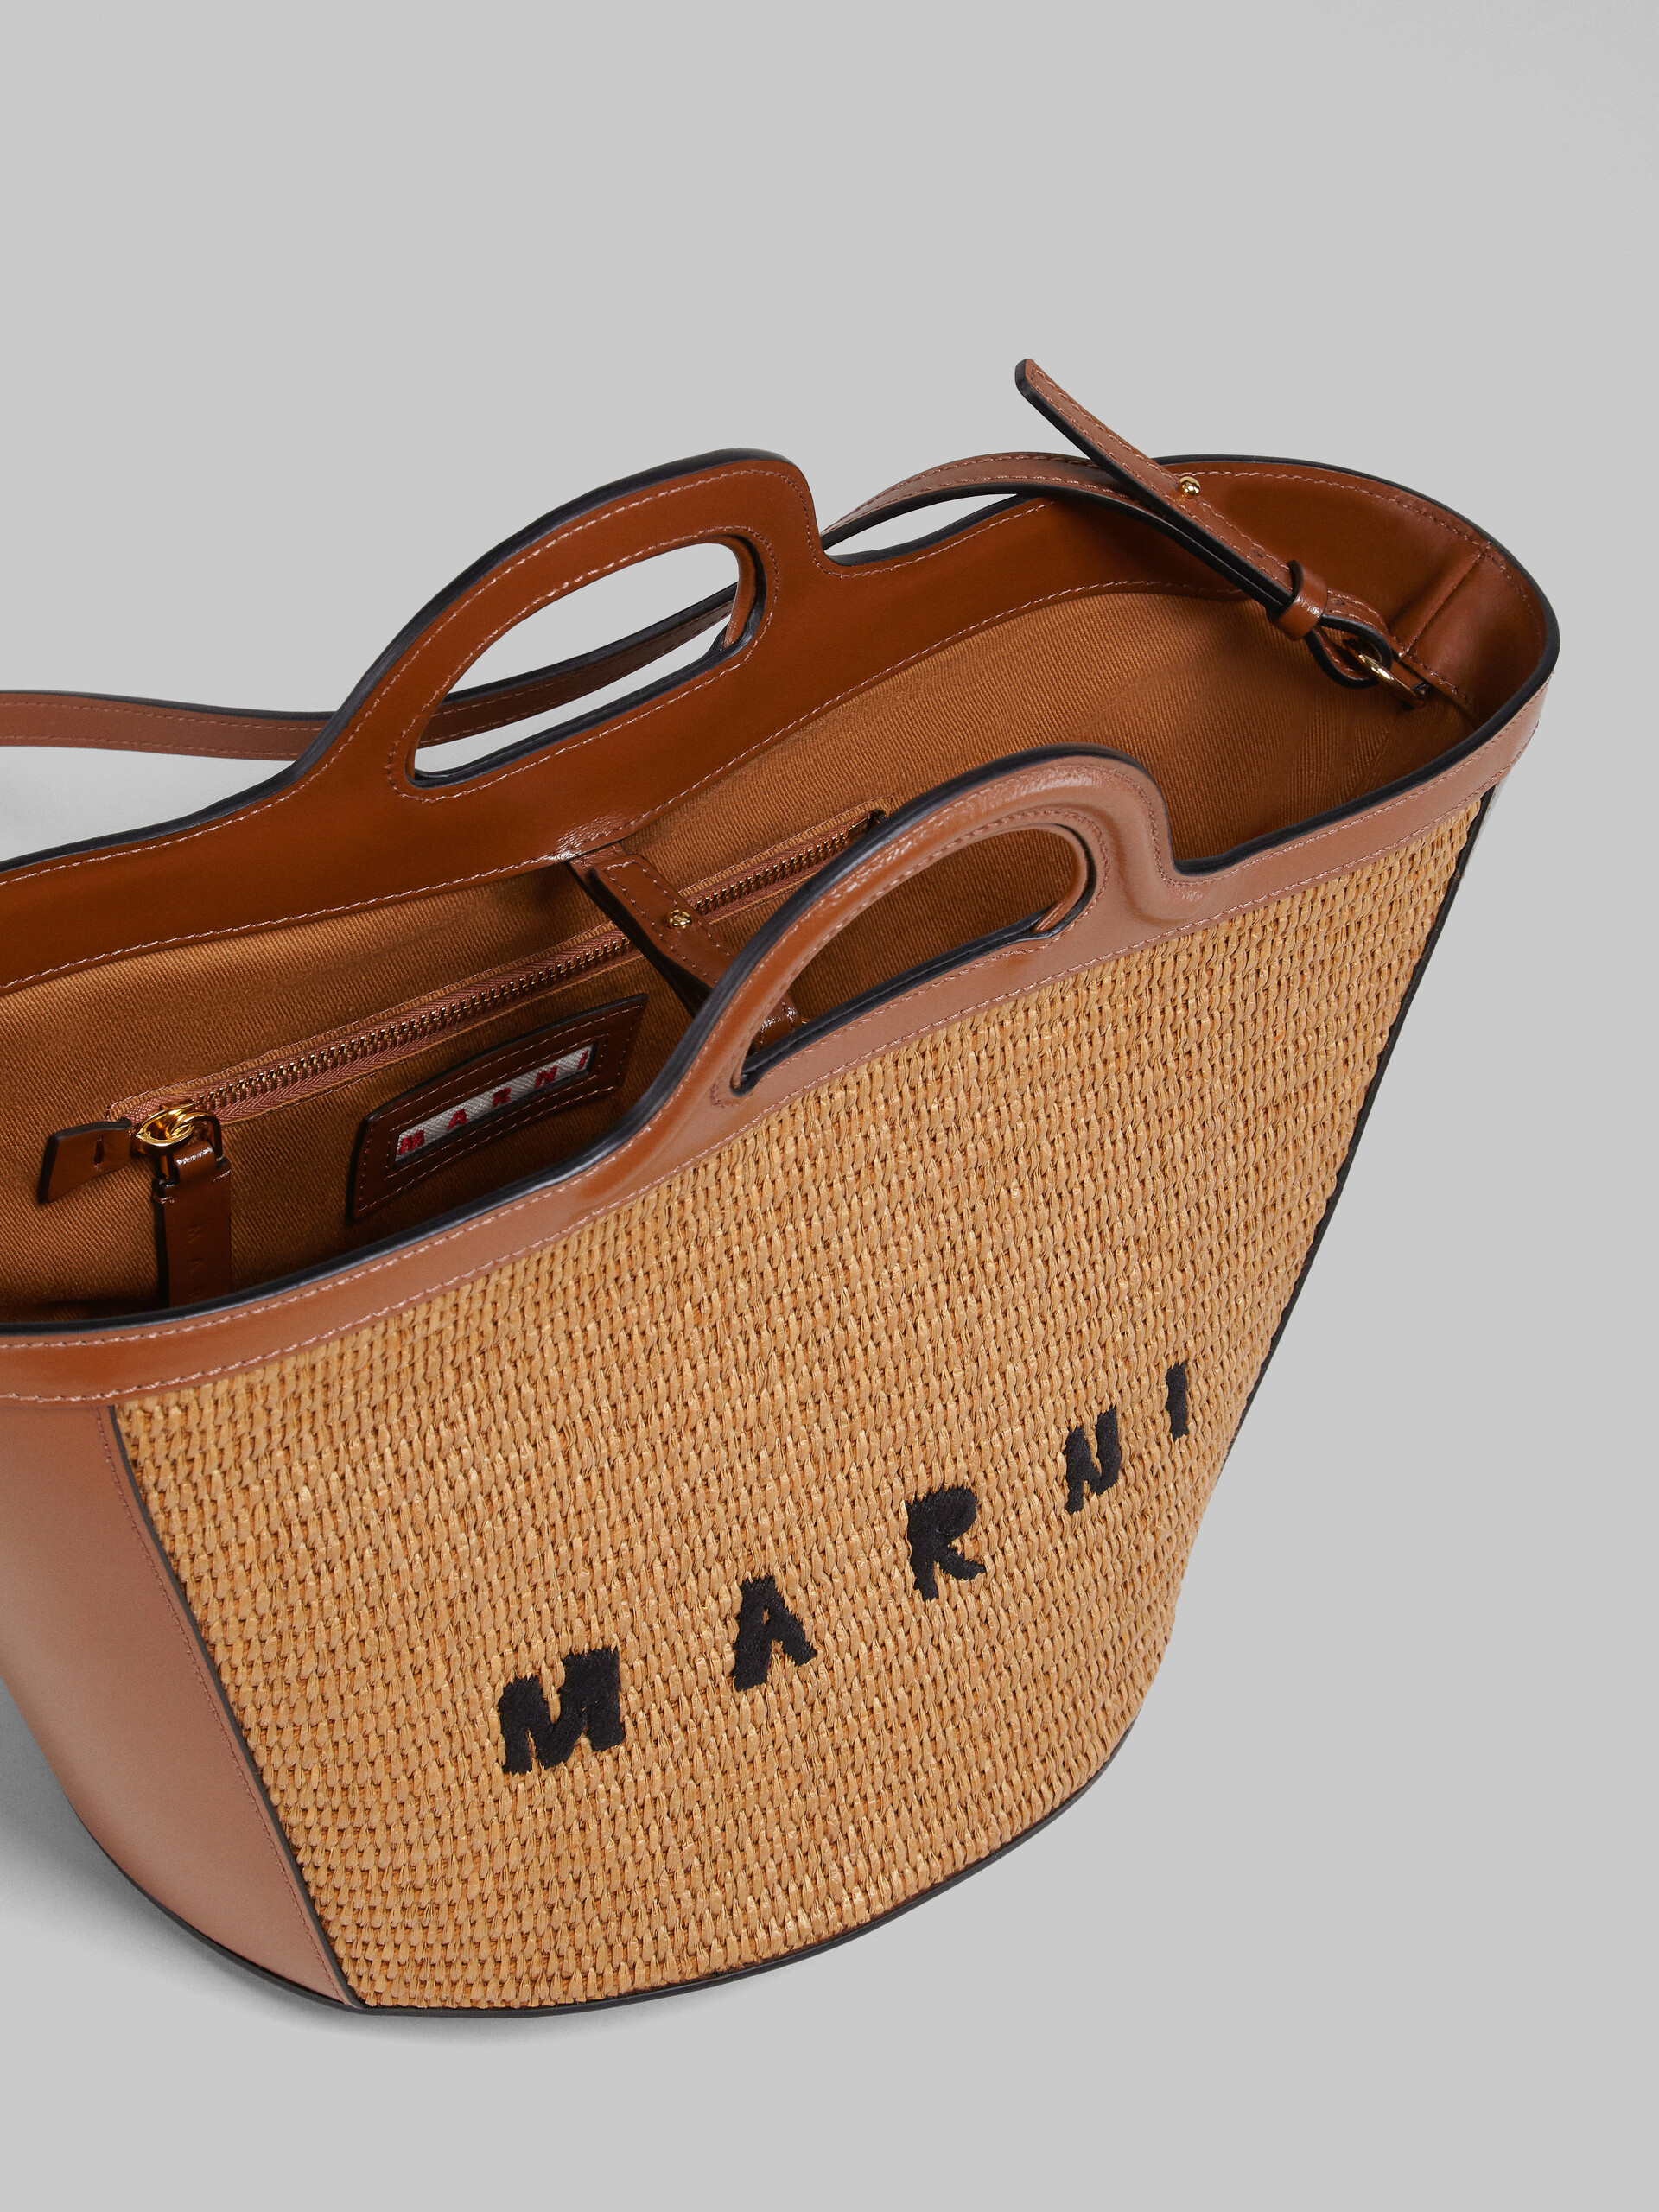 Tropicalia Small Bag in brown leather and raffia - Handbag - Image 5